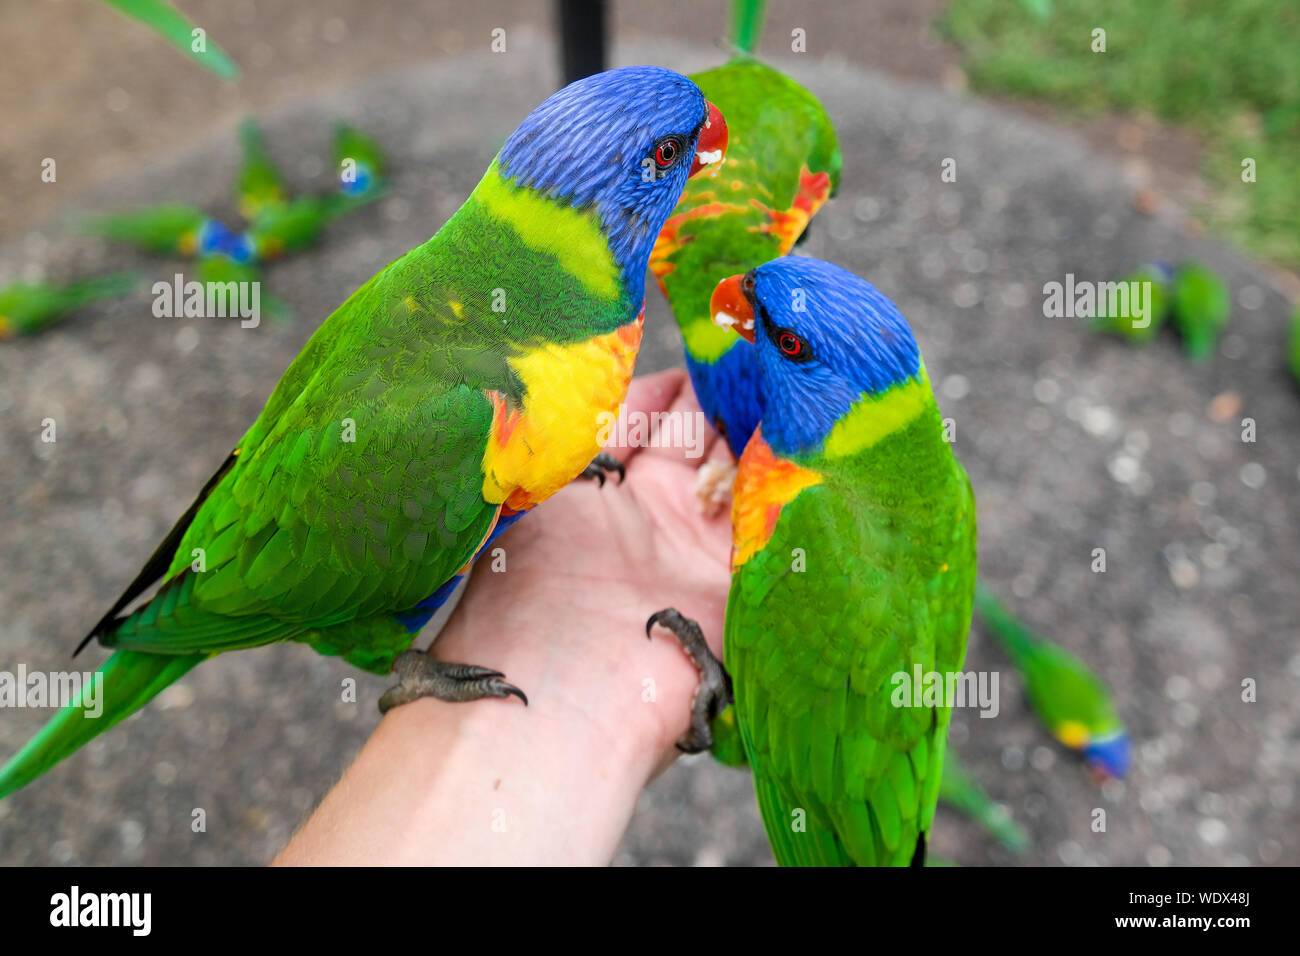 Cropped Image Of Hand Feeding Rainbow Lorikeets Stock Photo